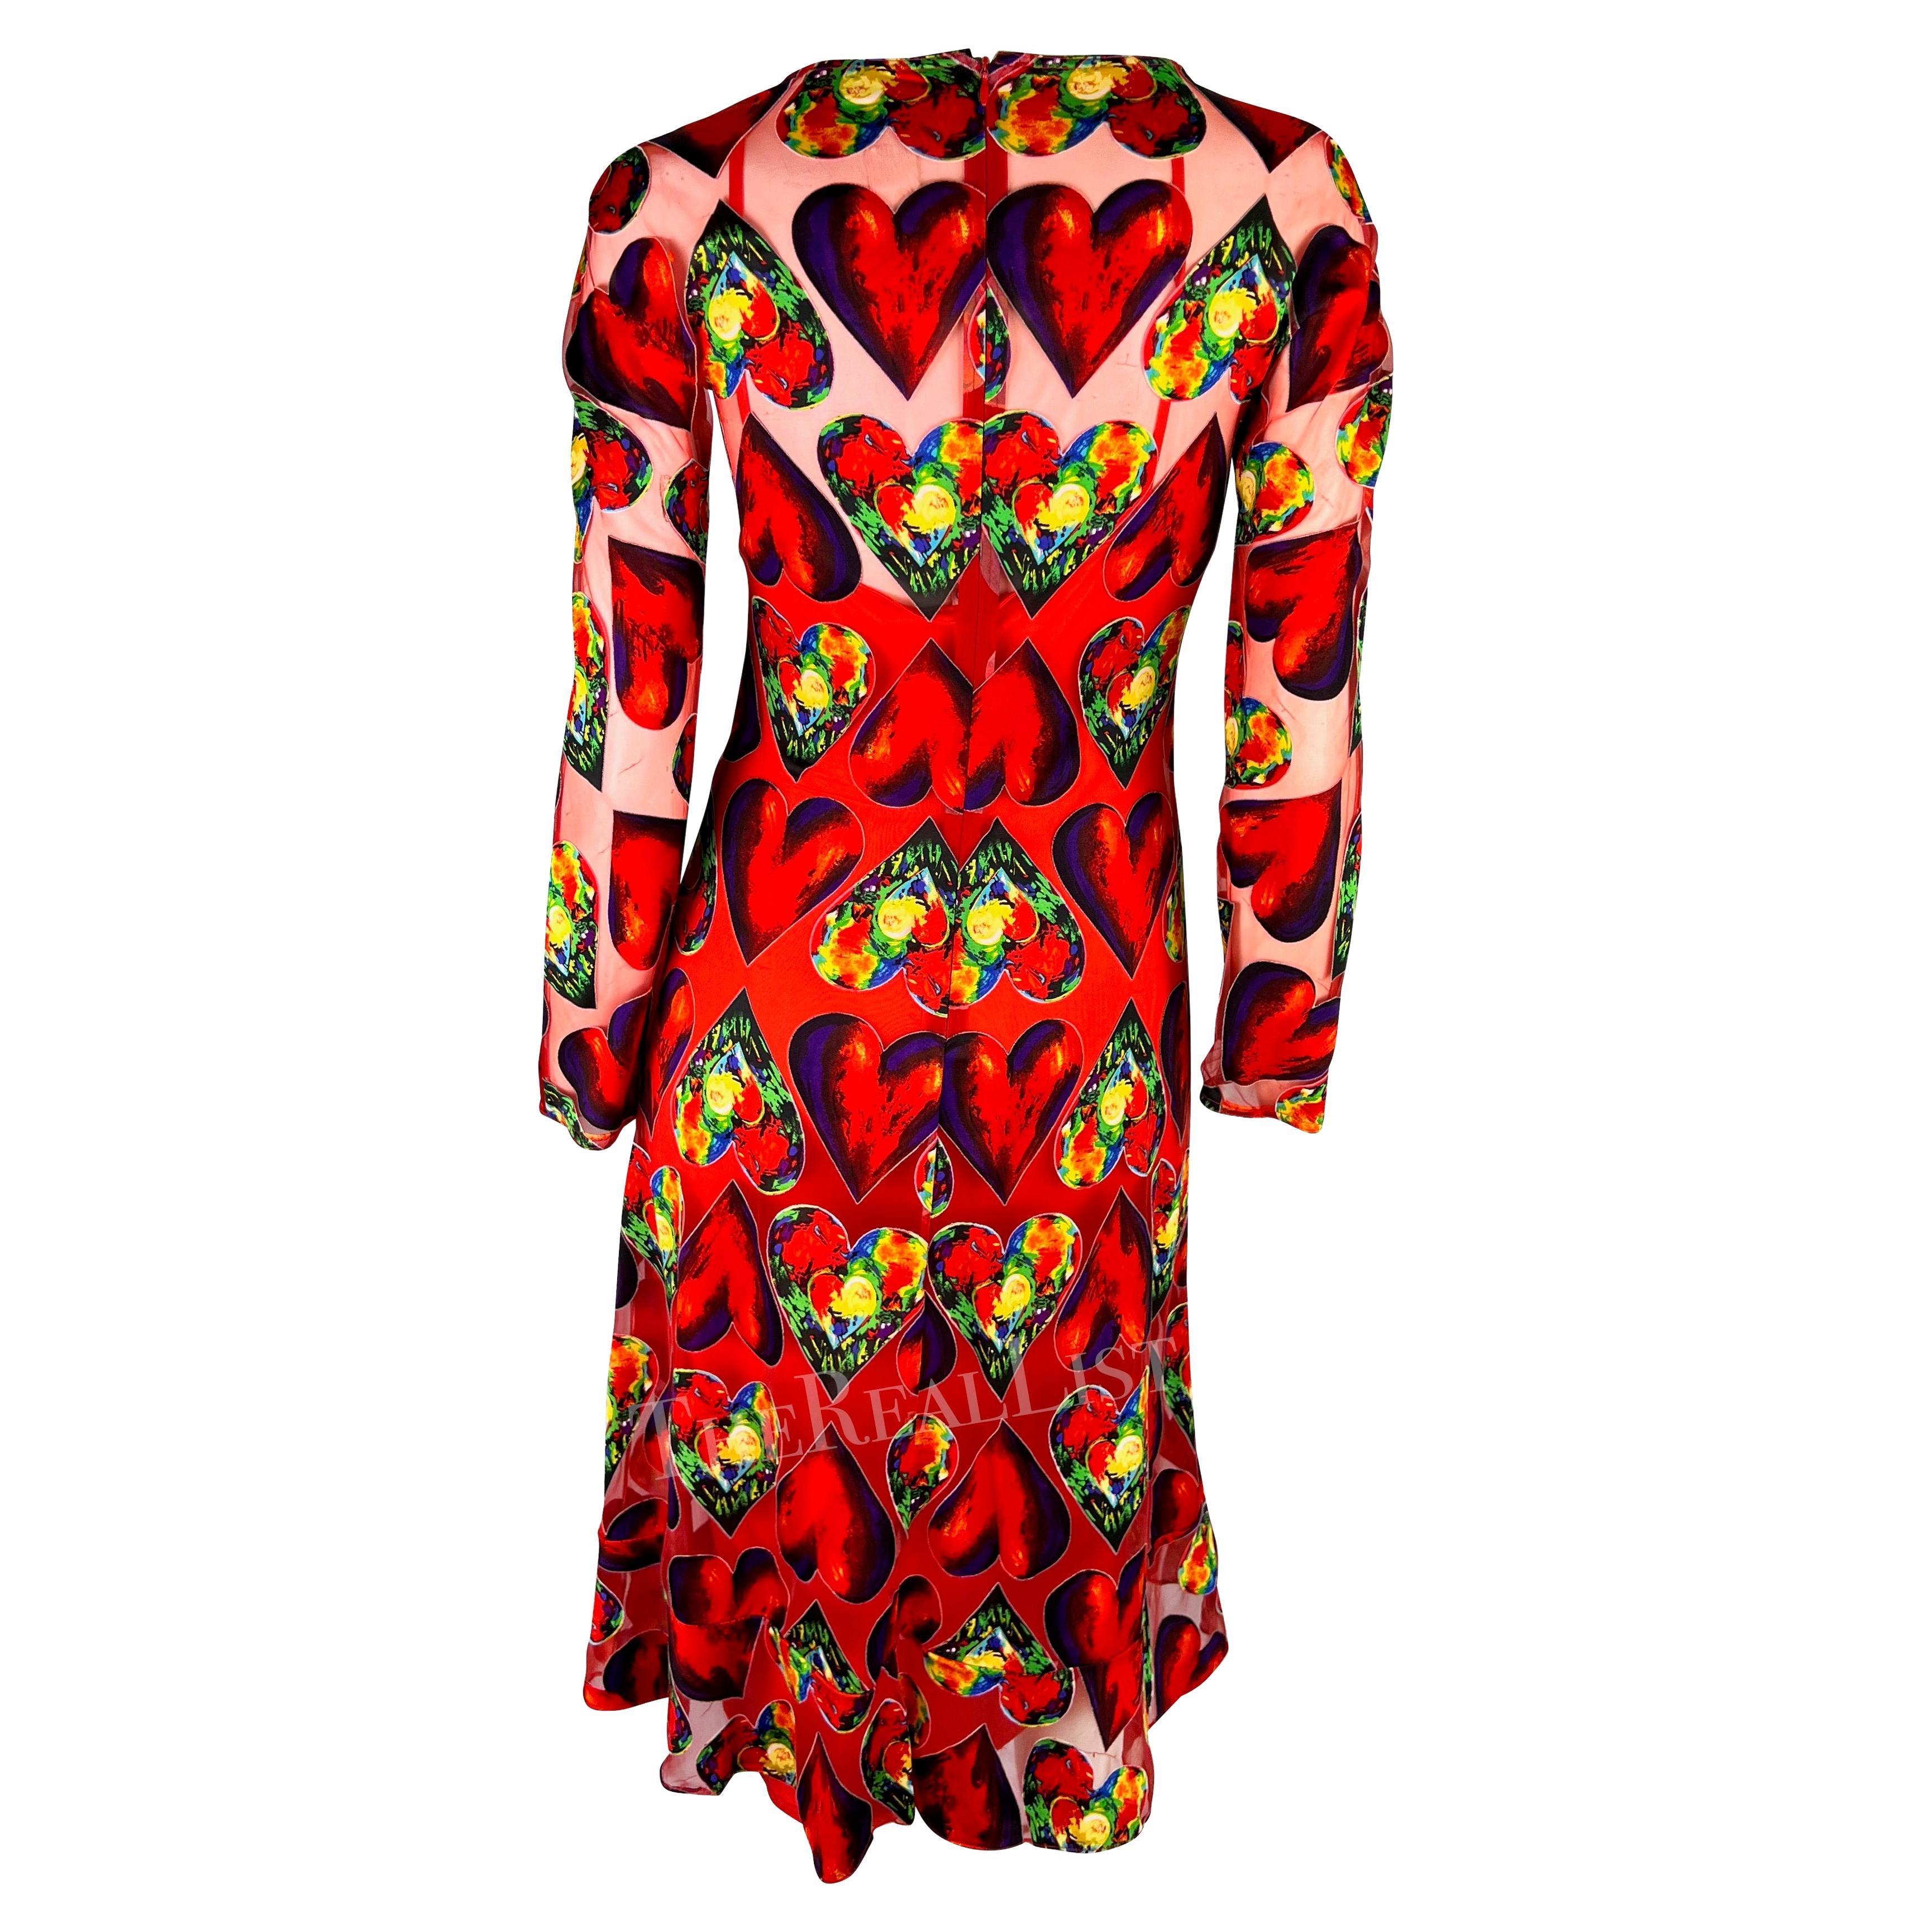 S/S 1997 Gianni Versace Runway Red Sheer Heart Print Bodycon Dress Slip Set For Sale 2